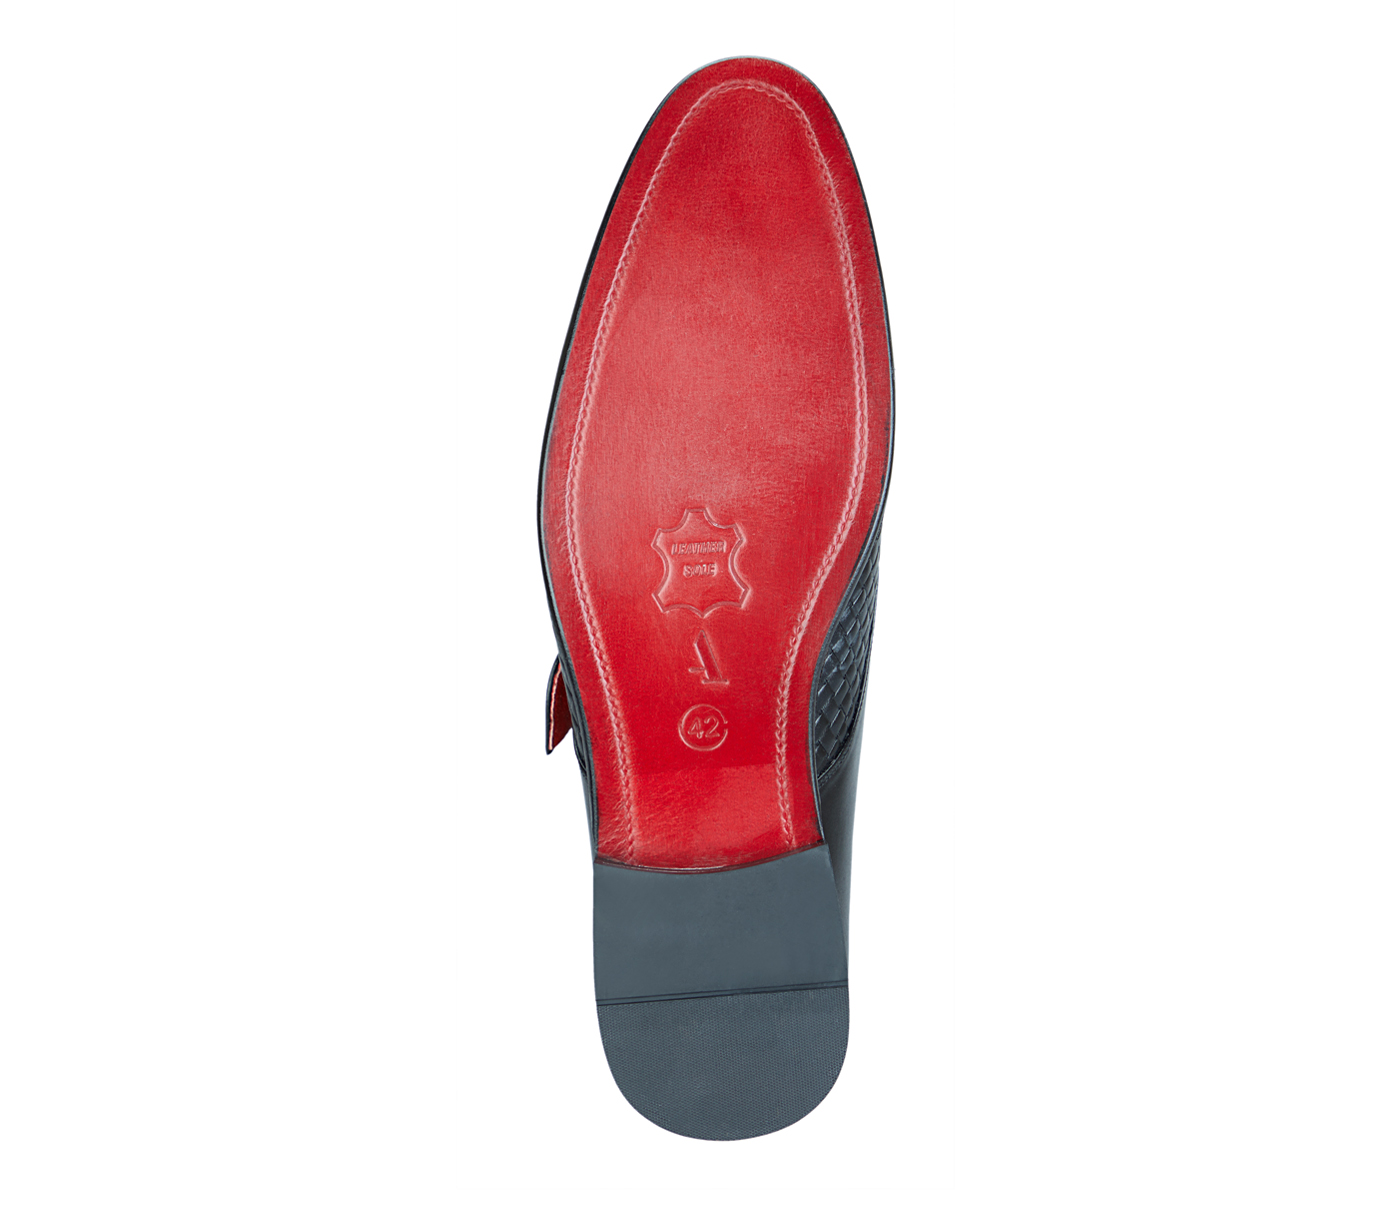 Louis Vuitton Red Bottoms Mens Dress Shoes